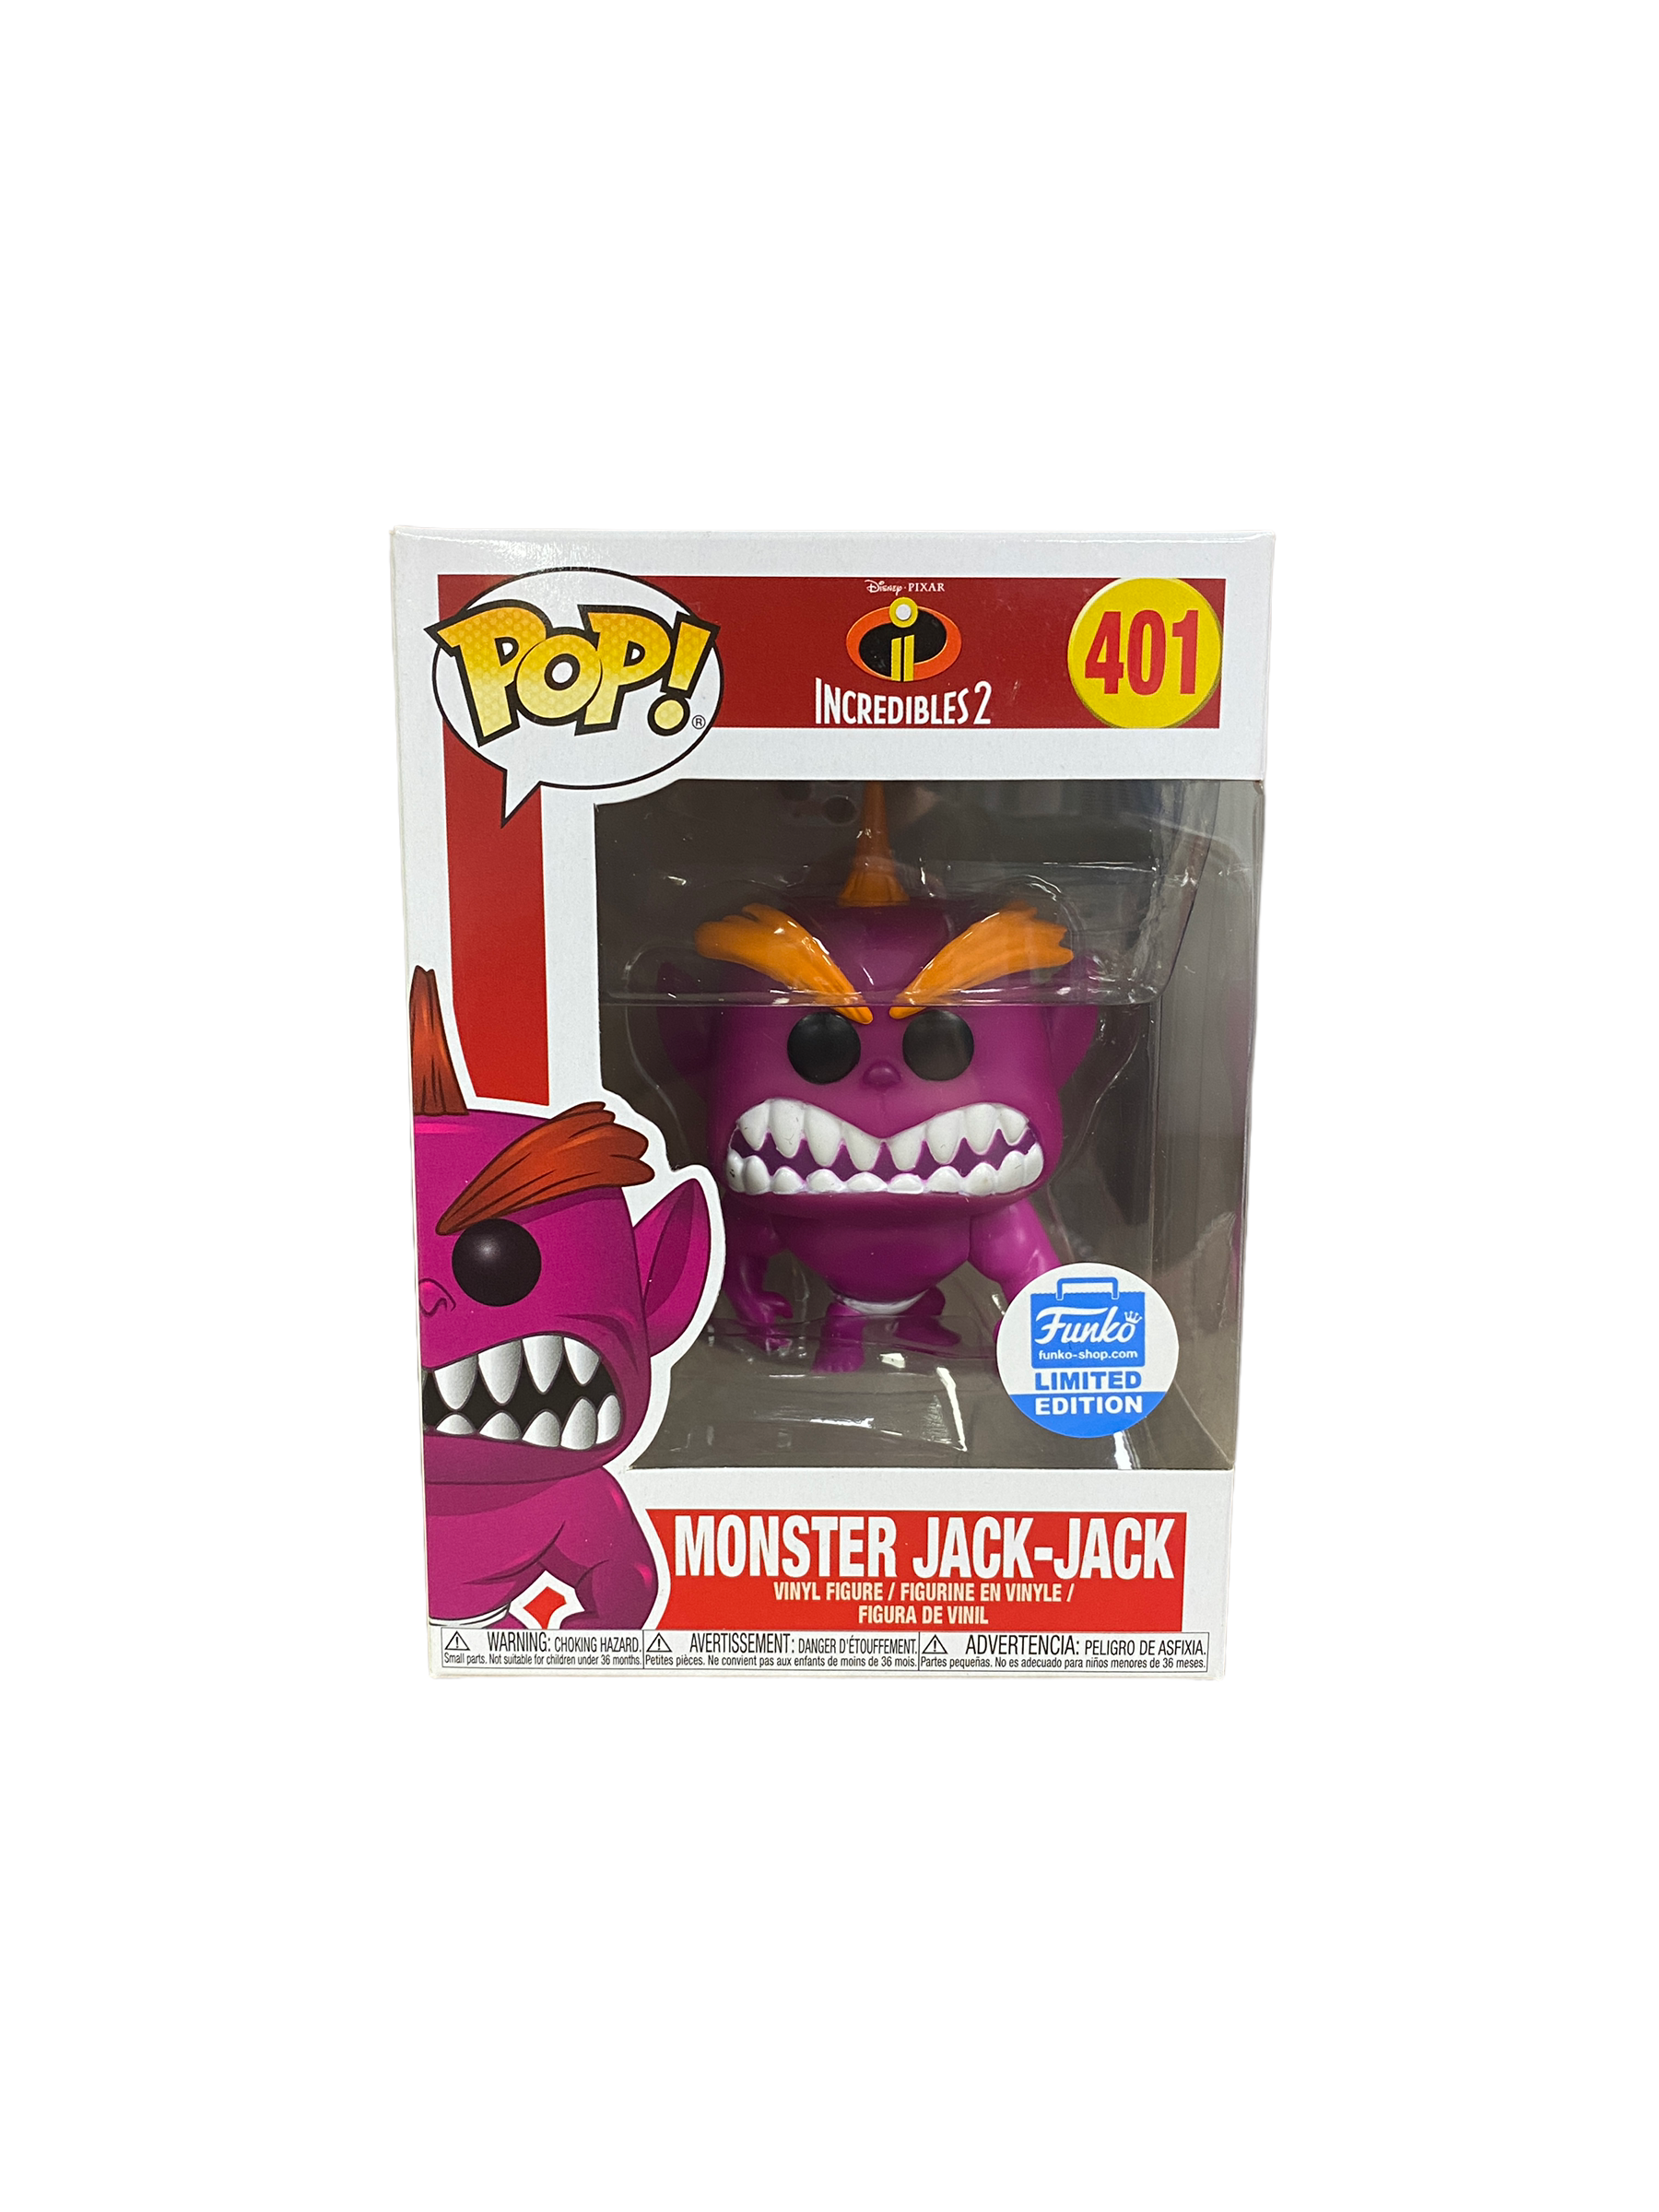 Monster Jack-Jack #401 Funko Pop! - Incredibles 2 - Funko Shop Exclusive - Condition 8.75/10